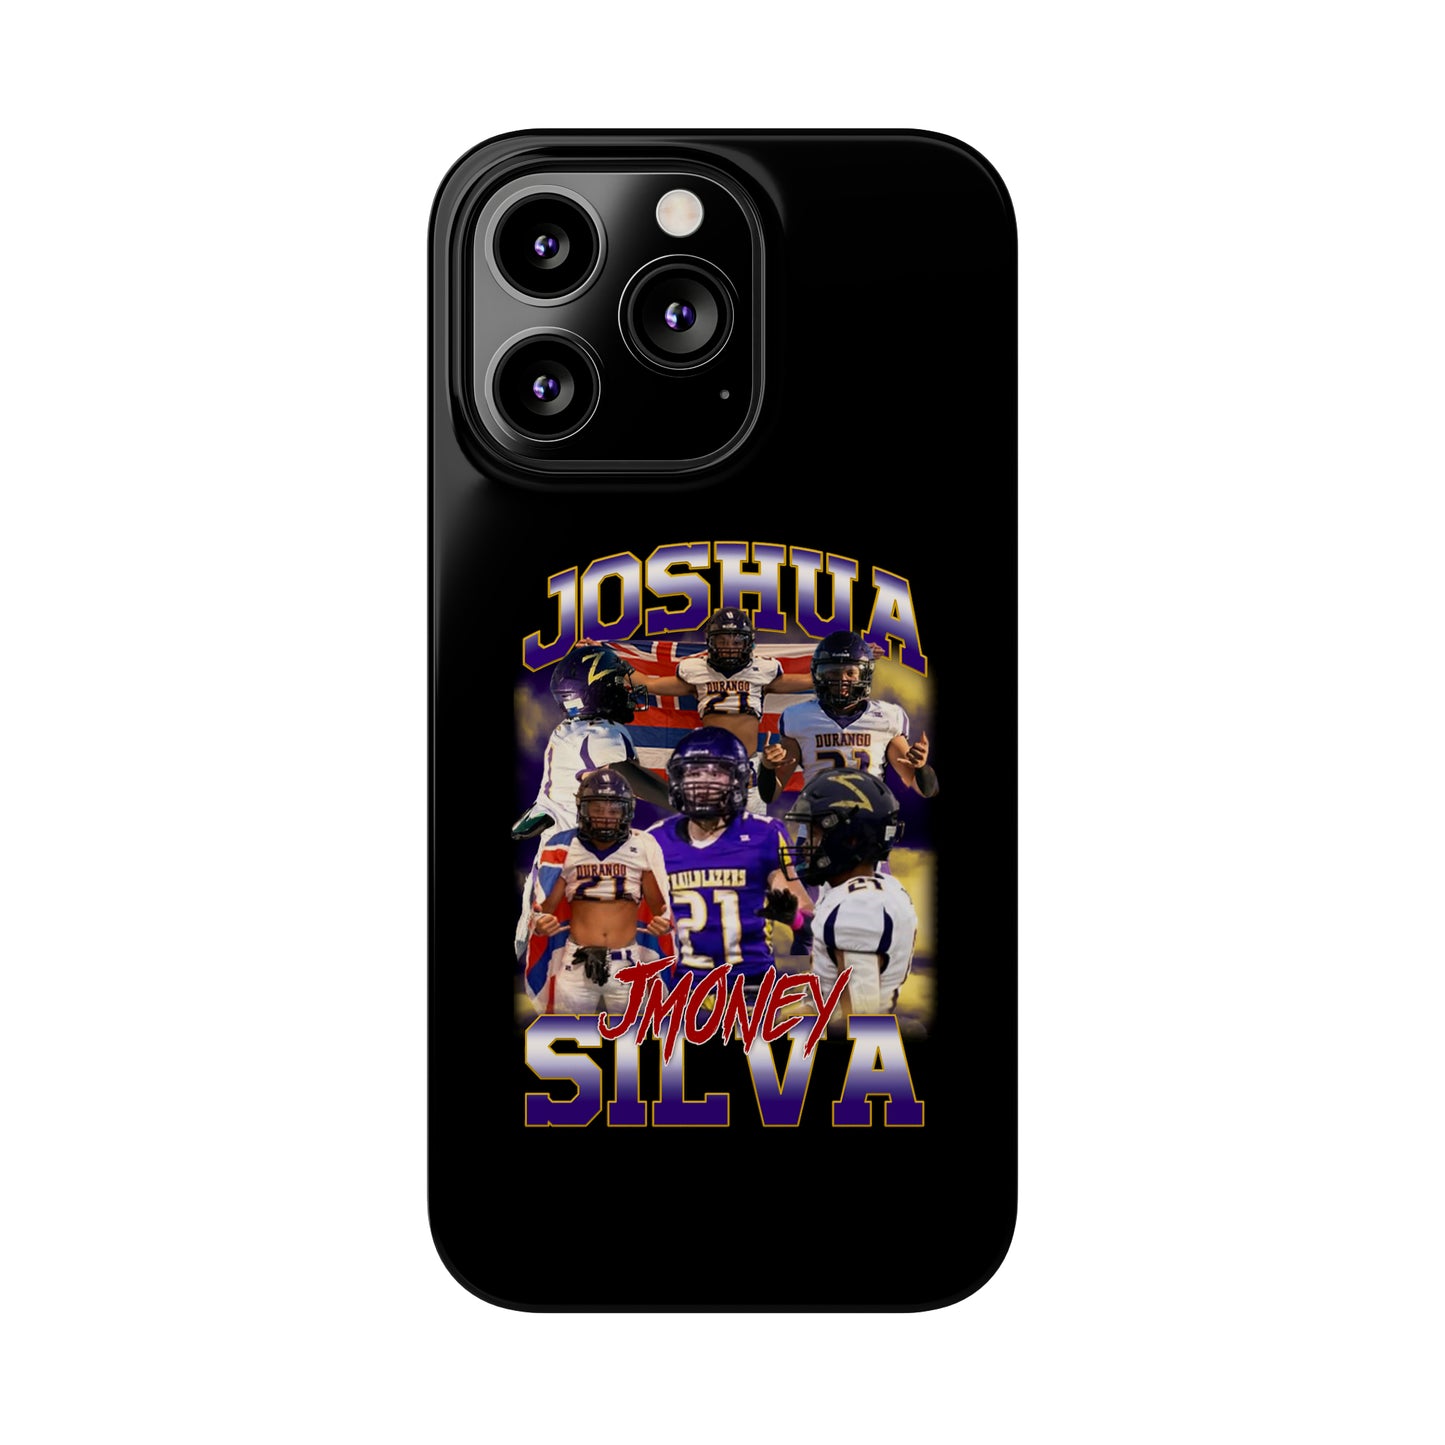 Joshua Silva Phone Case